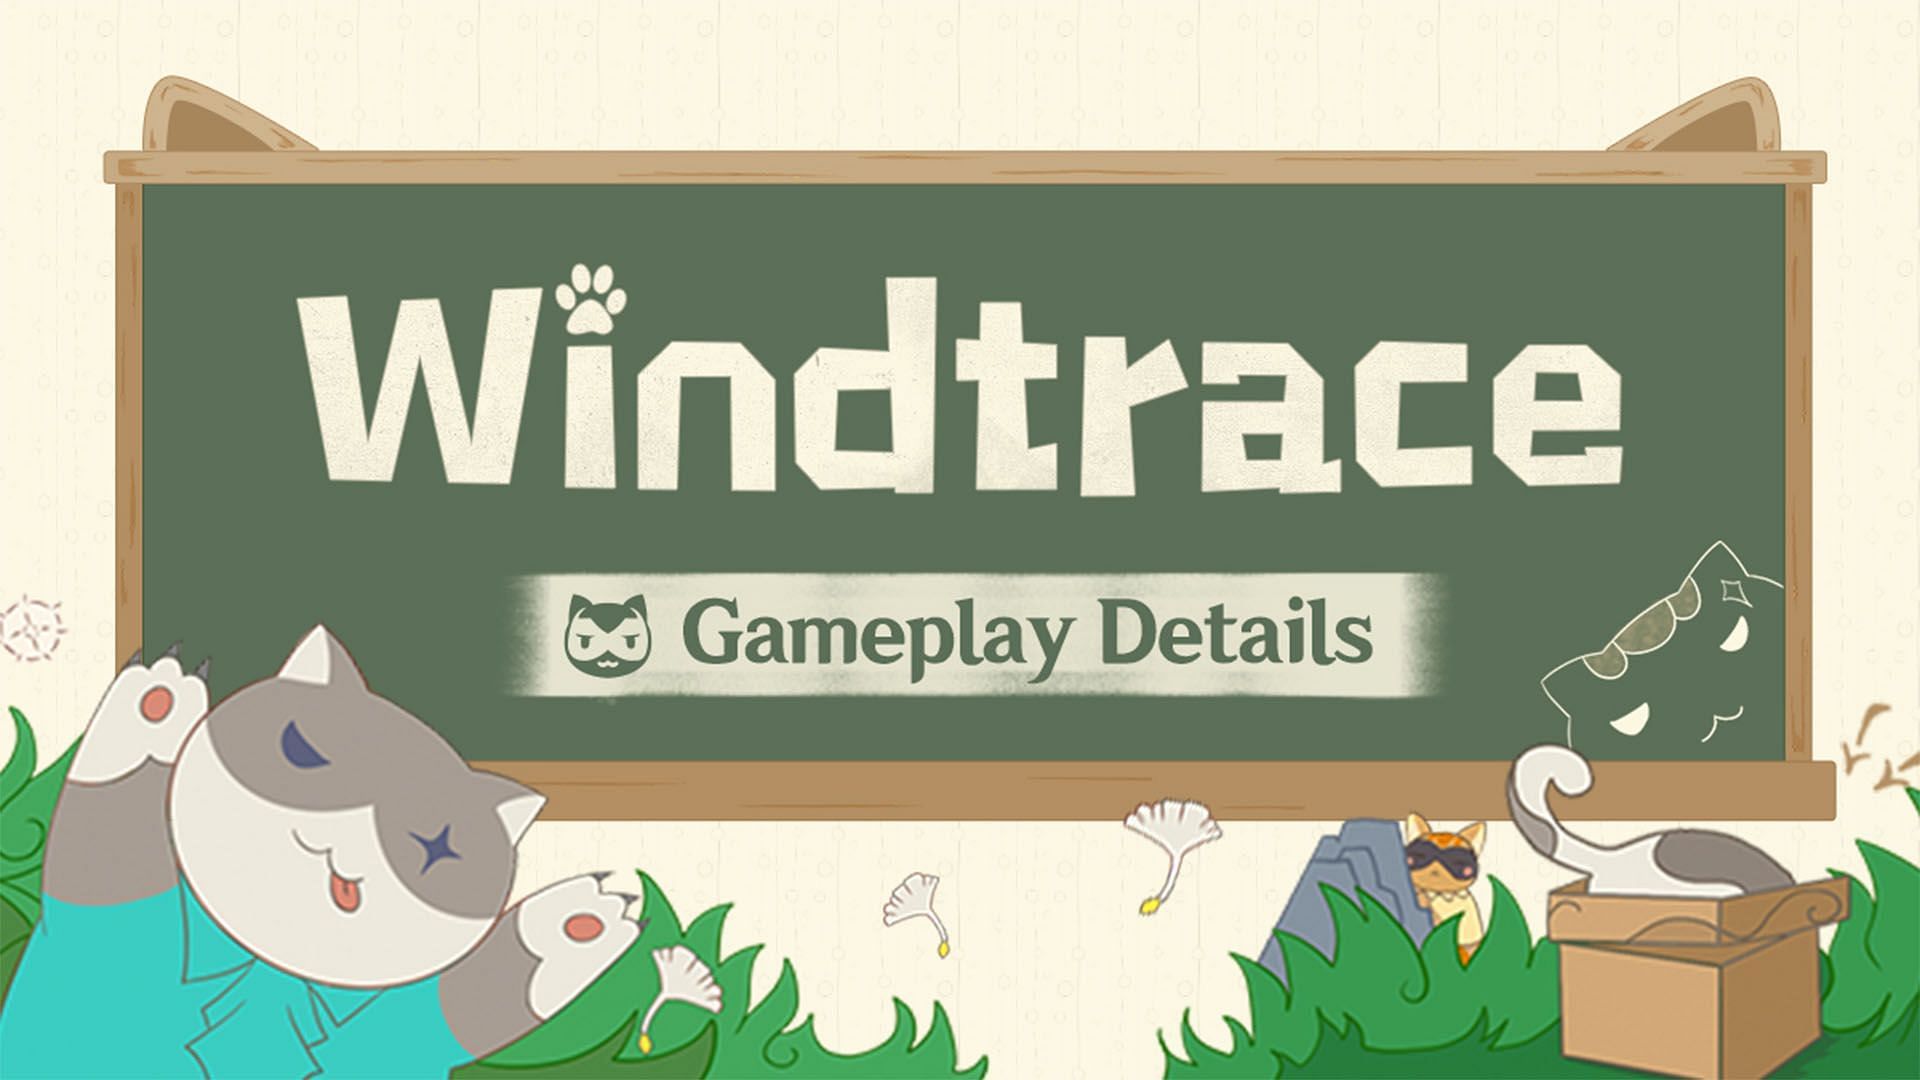 Windtrace gameplay details (Image via miHoYo)